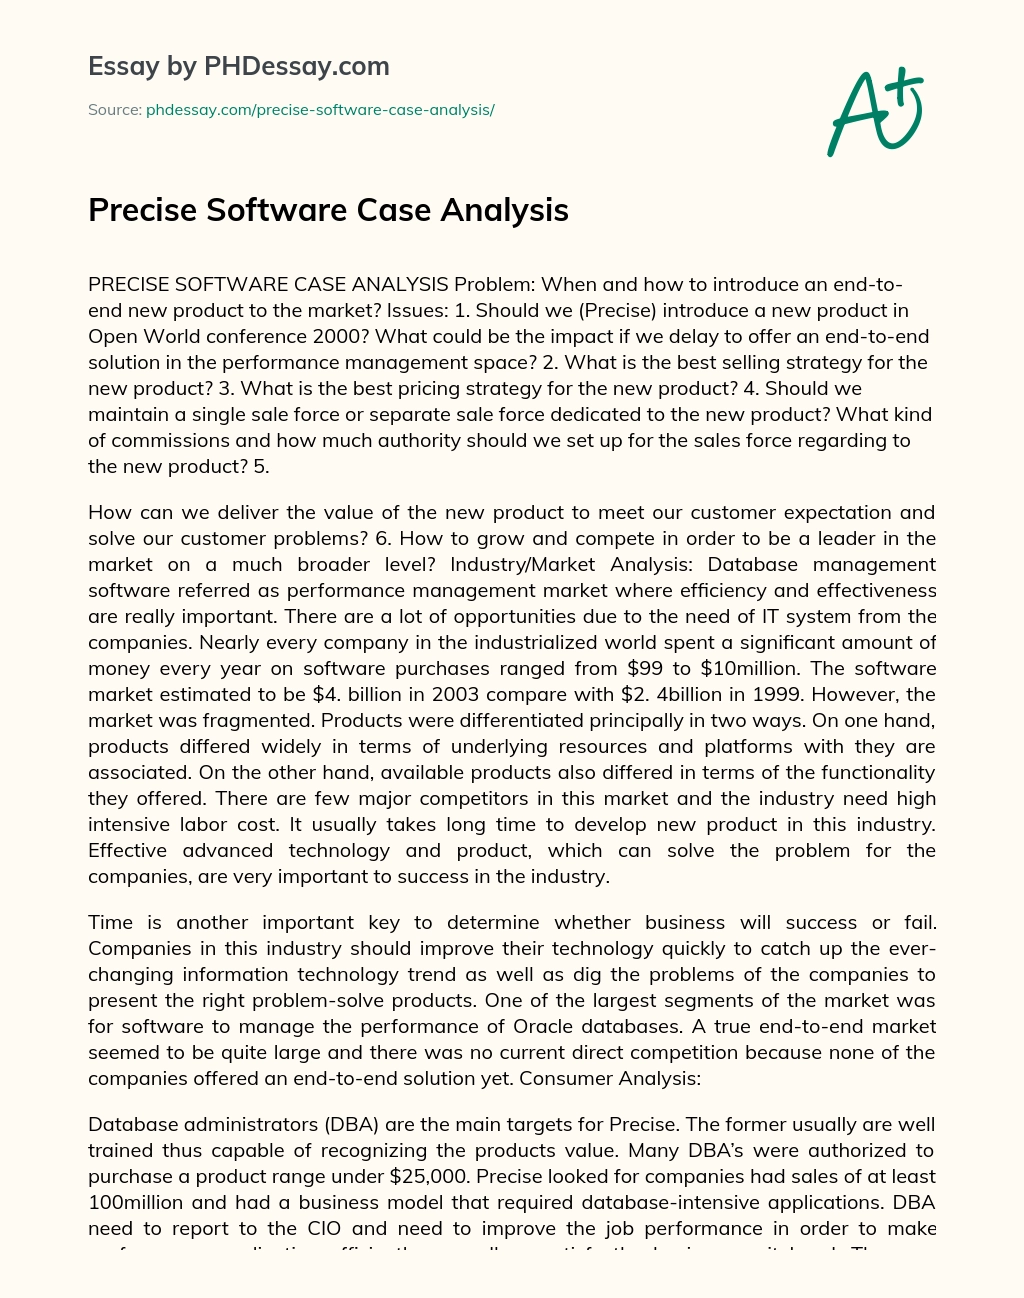 Precise Software Case Analysis essay